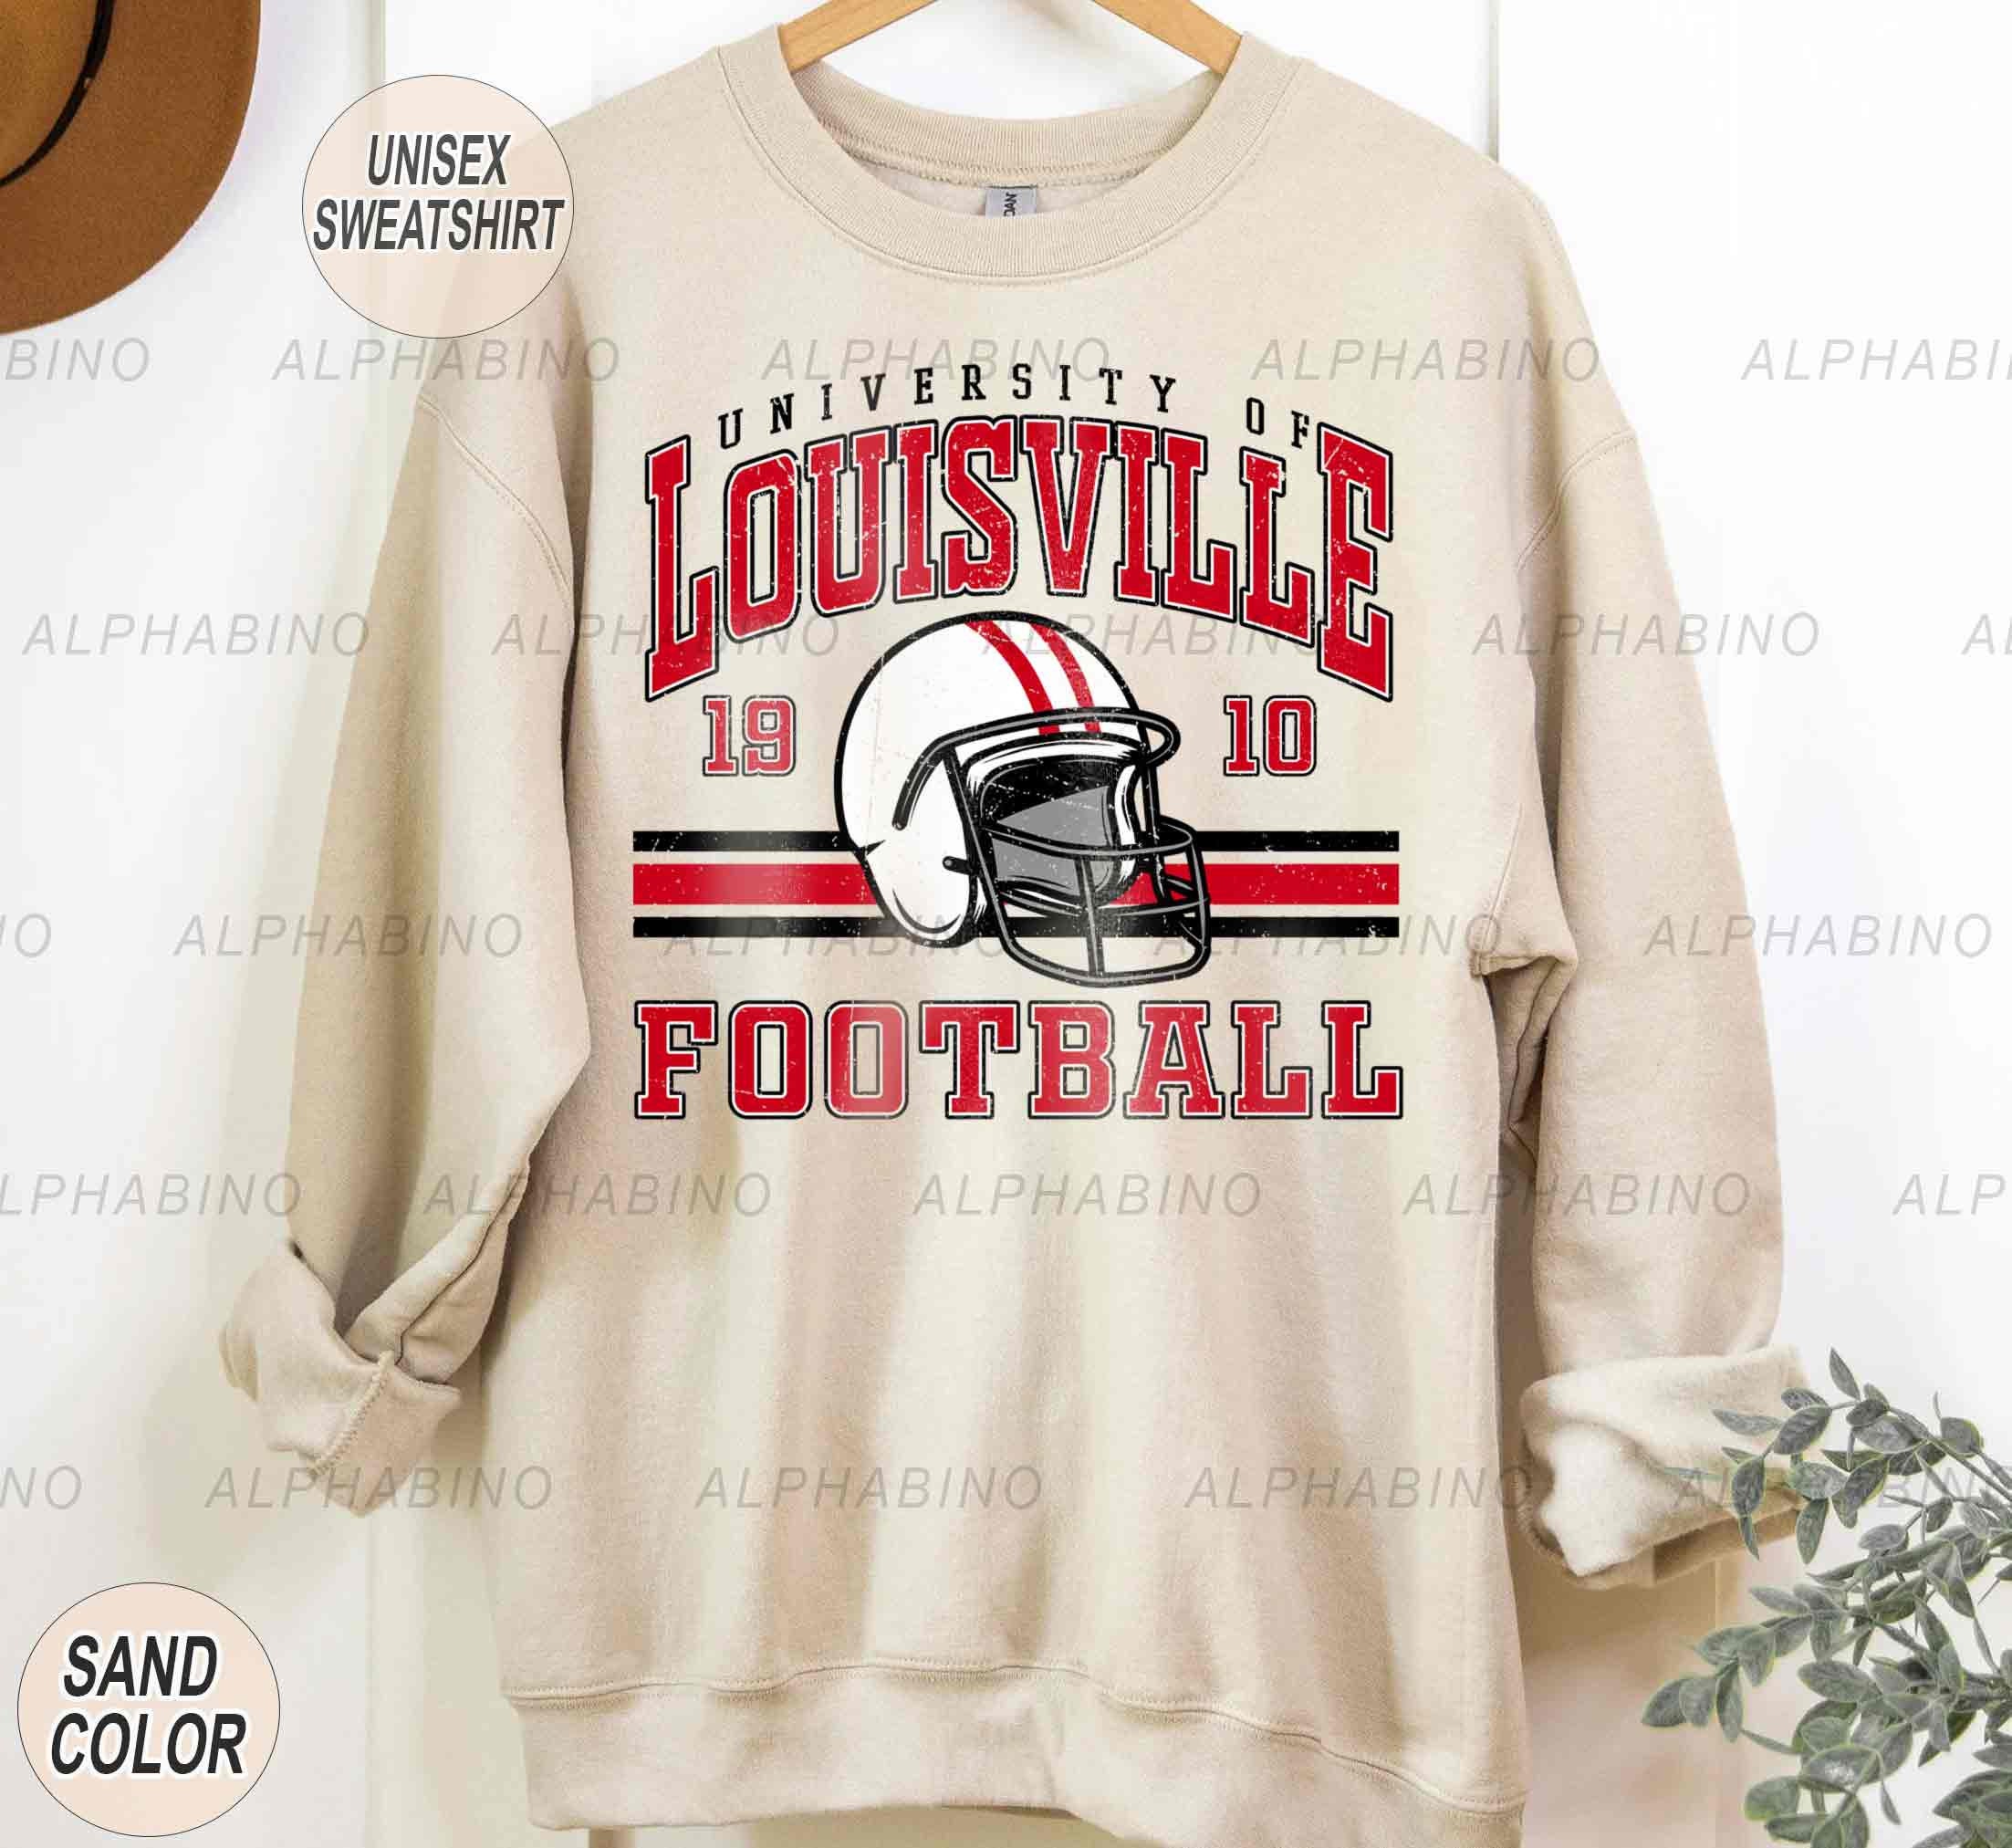 The Vintage Louisville Cardinals Big Block Crewneck Sweatshirt